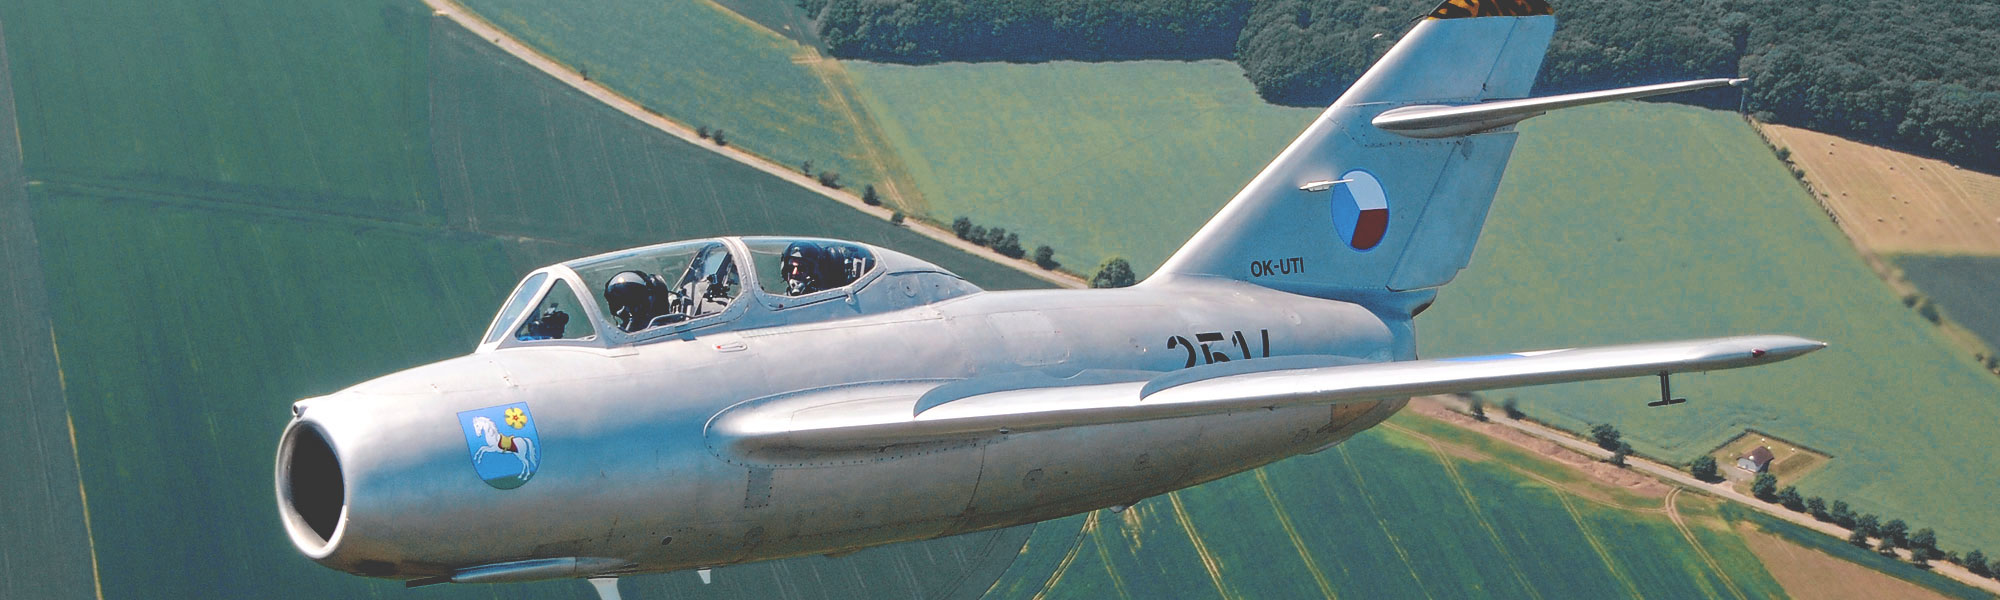 MiG-15 Fagot - Jet Warbird Legende